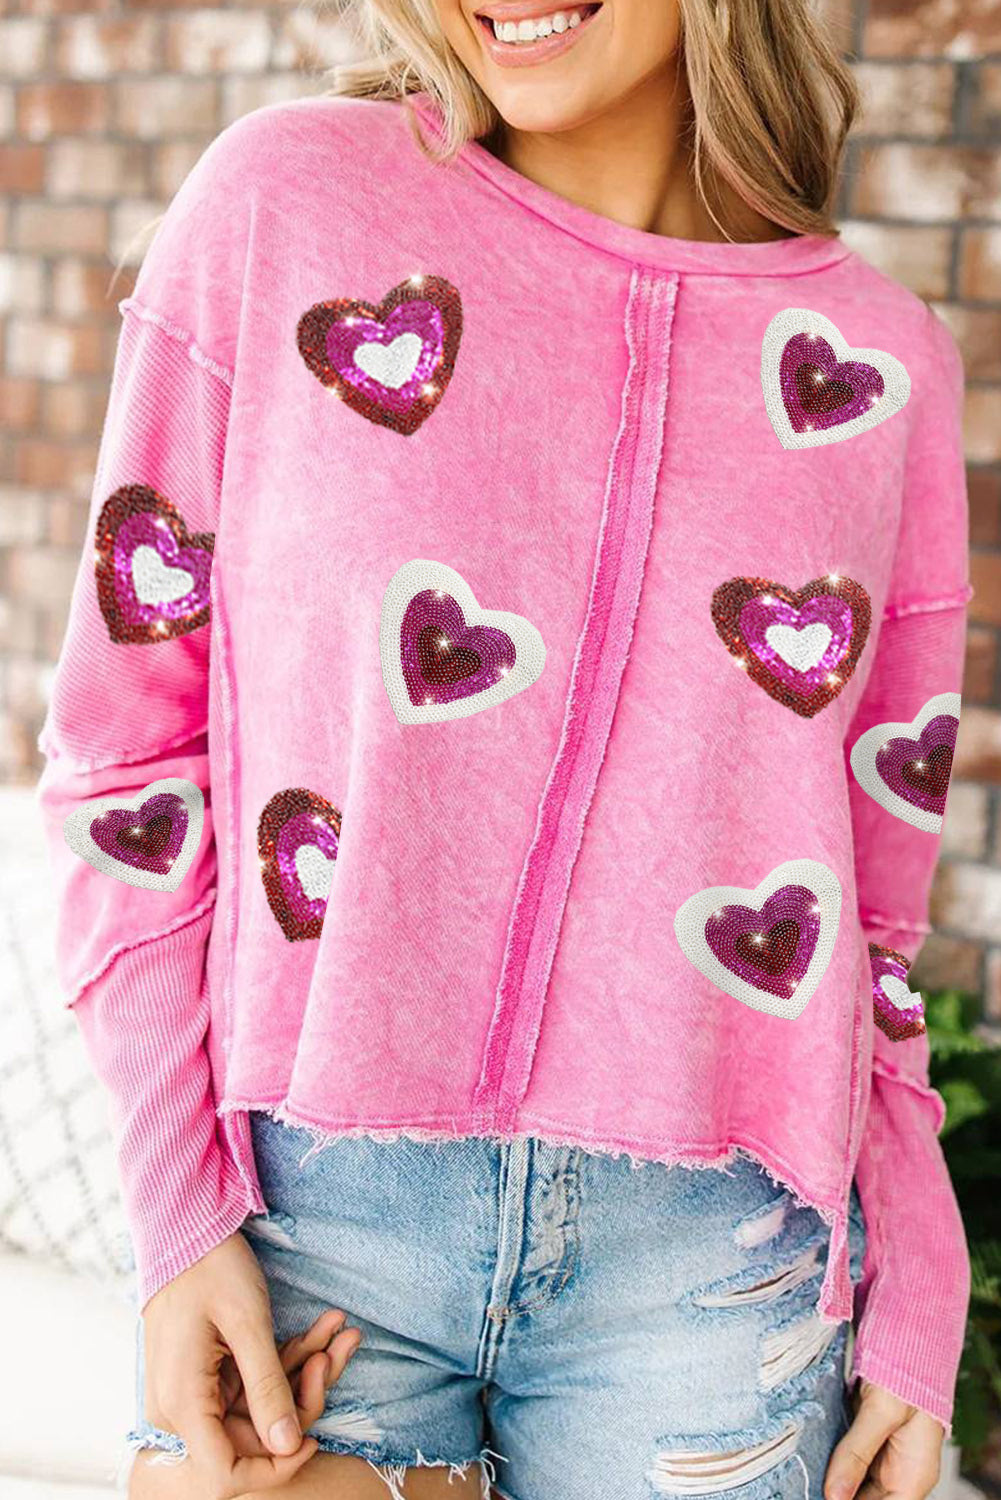 LC25317060-6-S, LC25317060-6-M, LC25317060-6-L, LC25317060-6-XL, LC25317060-6-2XL, Rose Valentines Day Sweatshirt Sequin Heart Shaped Long Sleeve Tops